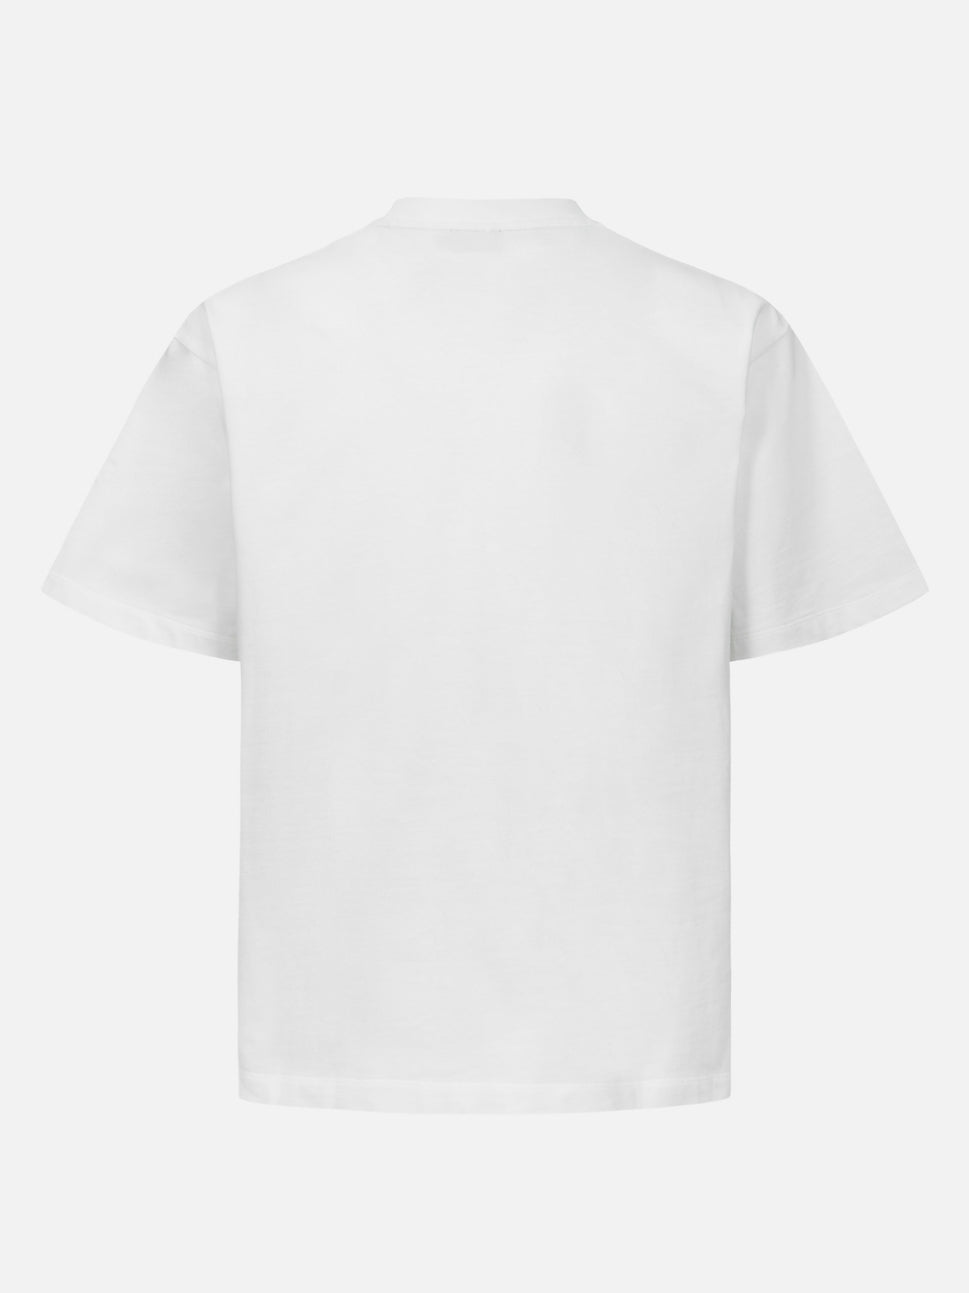 Evisu Seagull Print And Pins T-Shirt